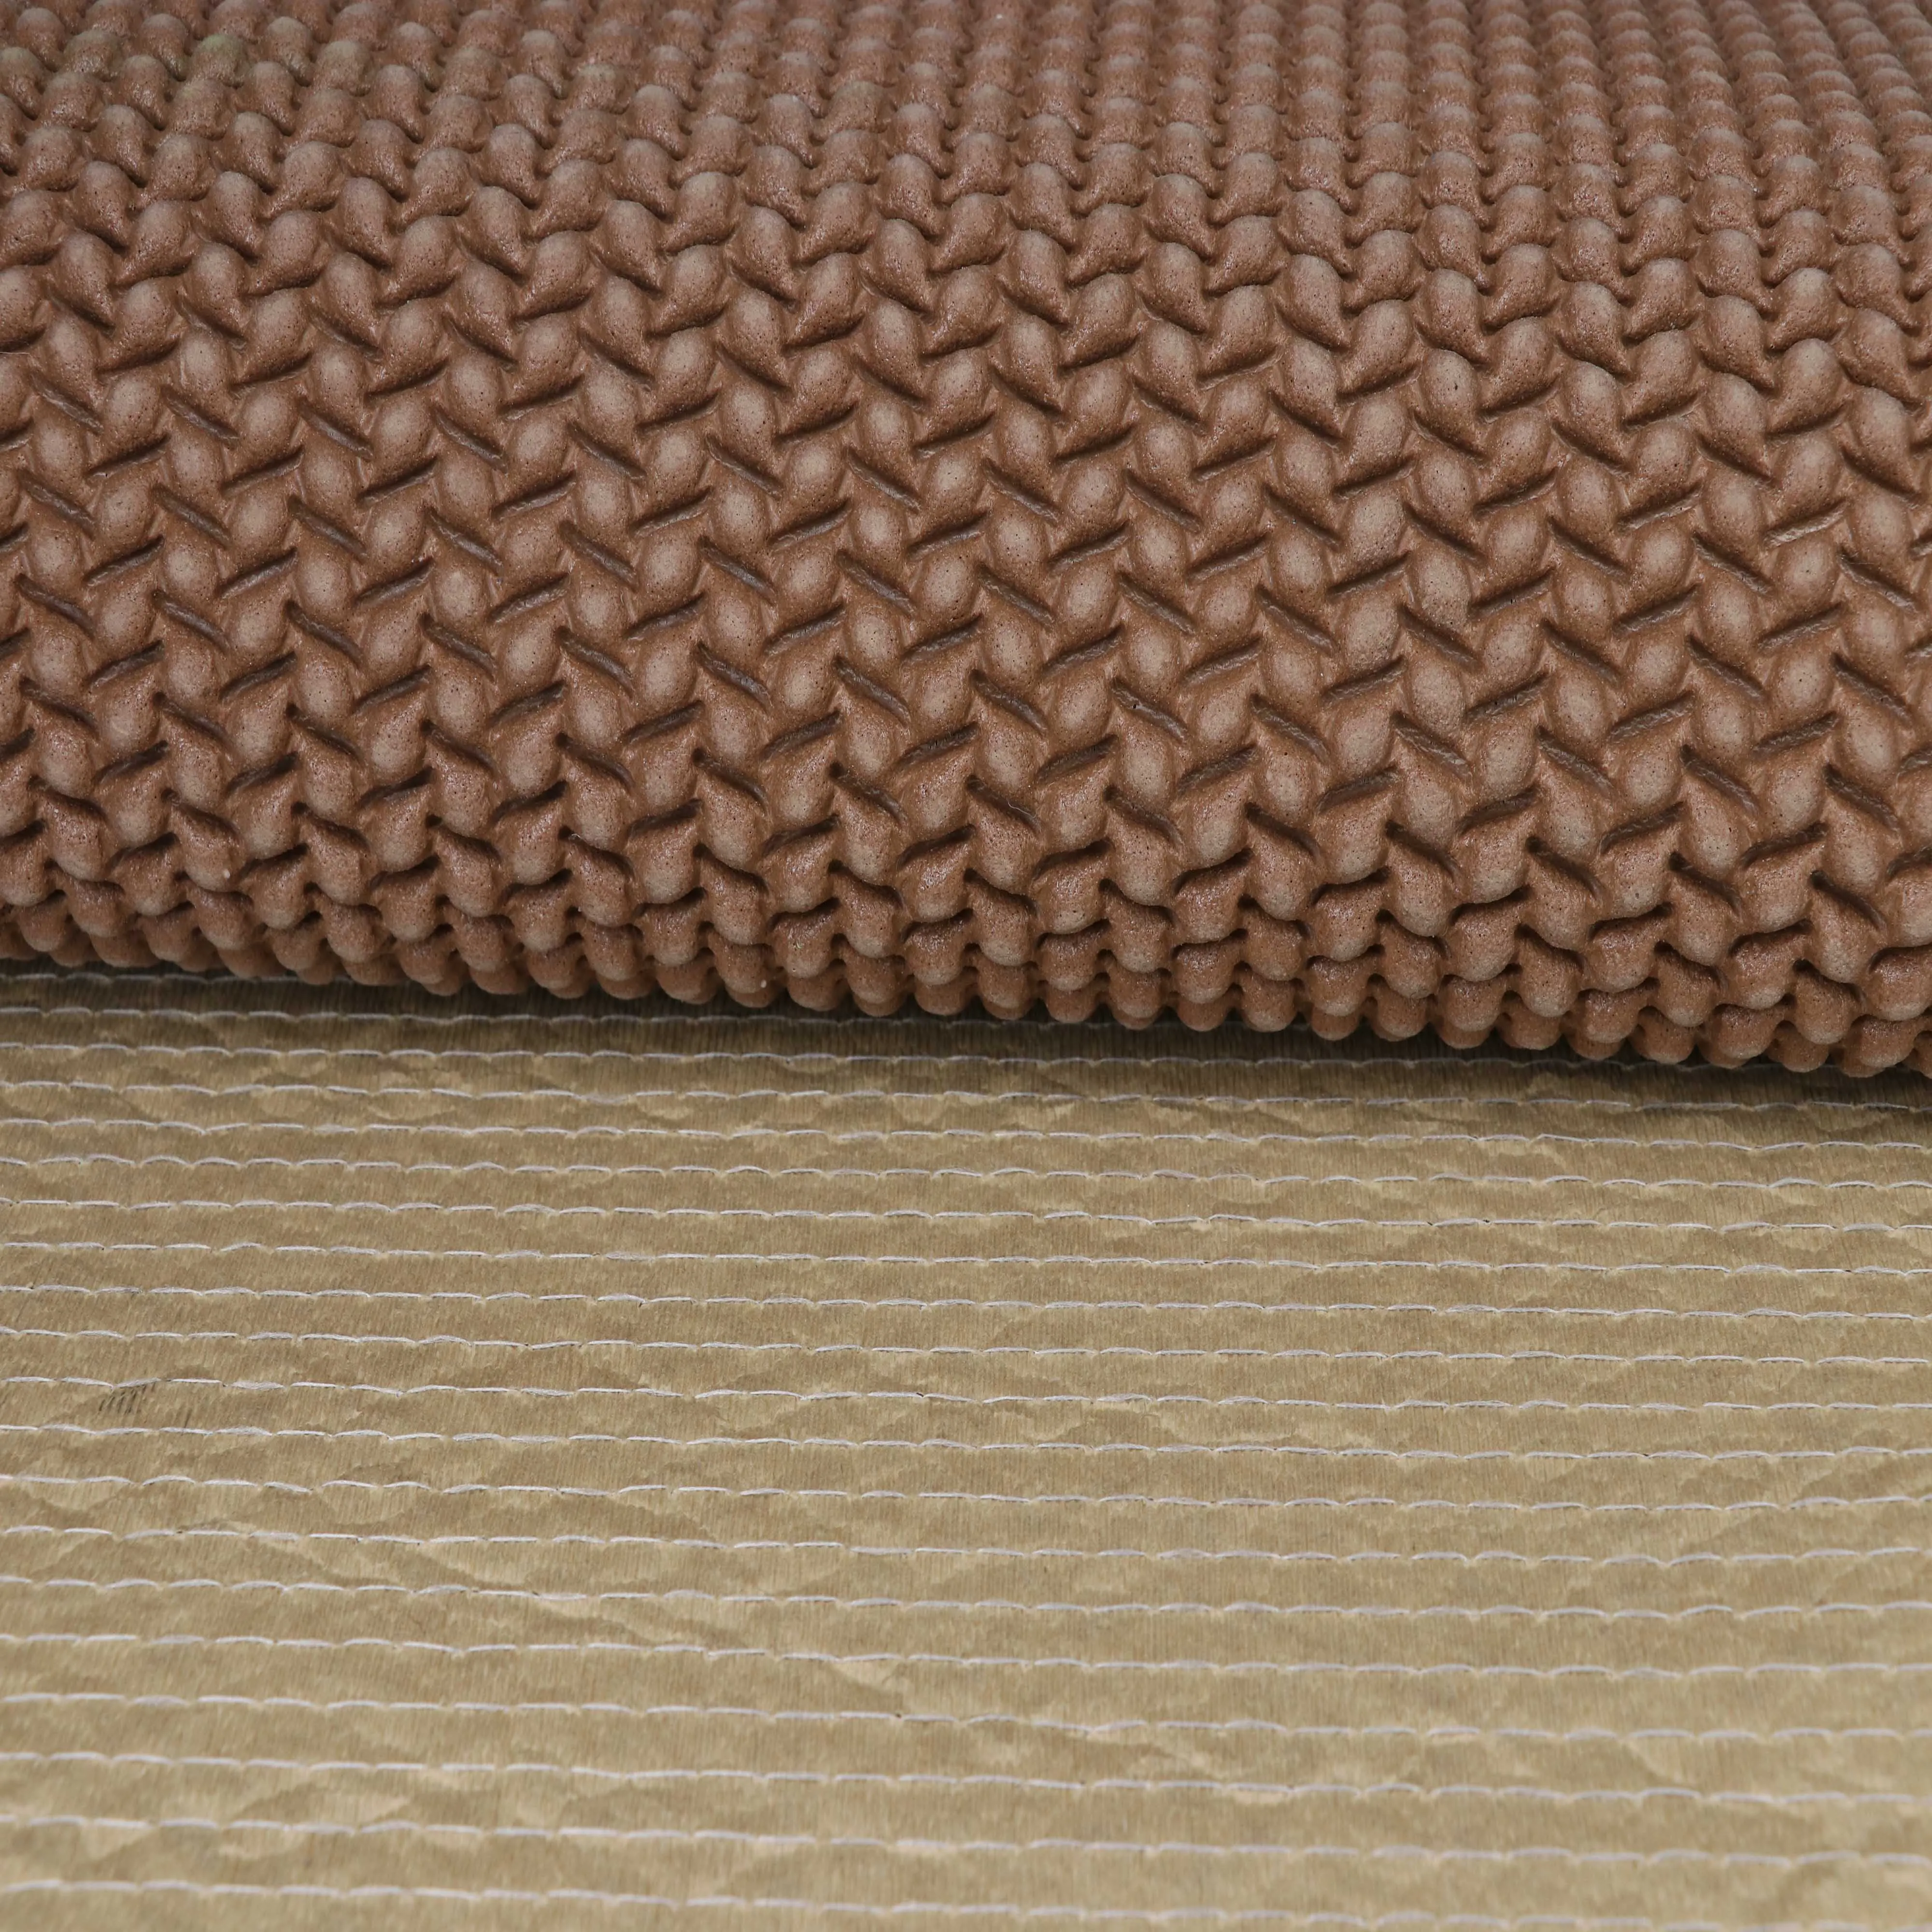 Volden 10mm Foam Carpet Underlay roll, 15m²